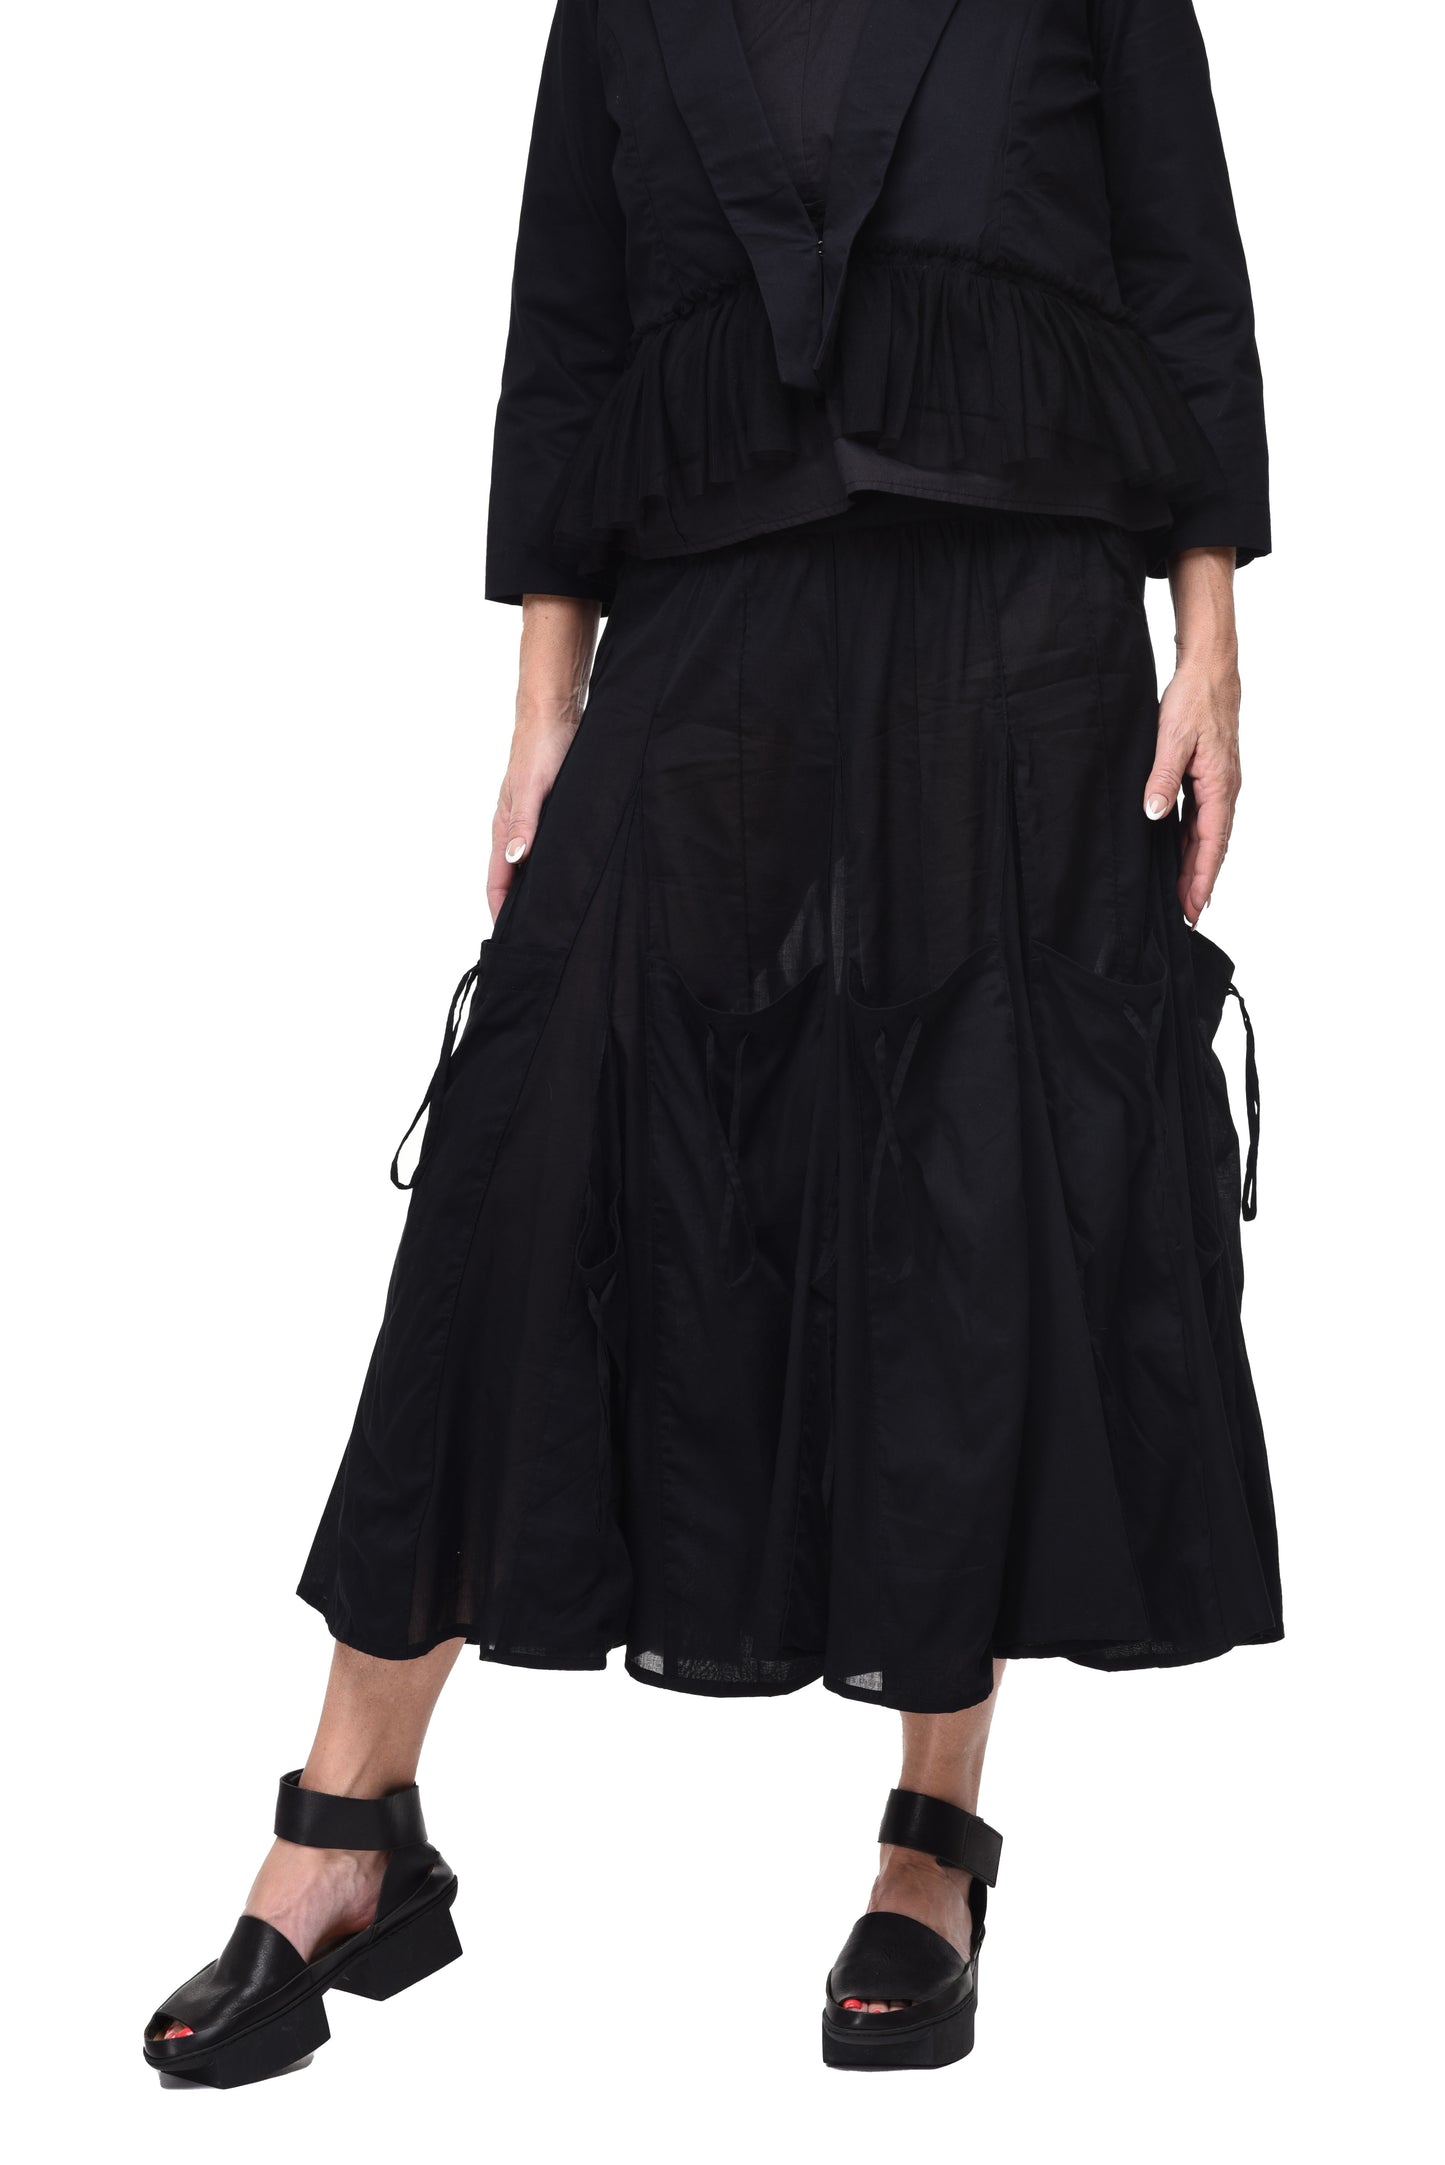 CV101 Alexus Skirt in Black*